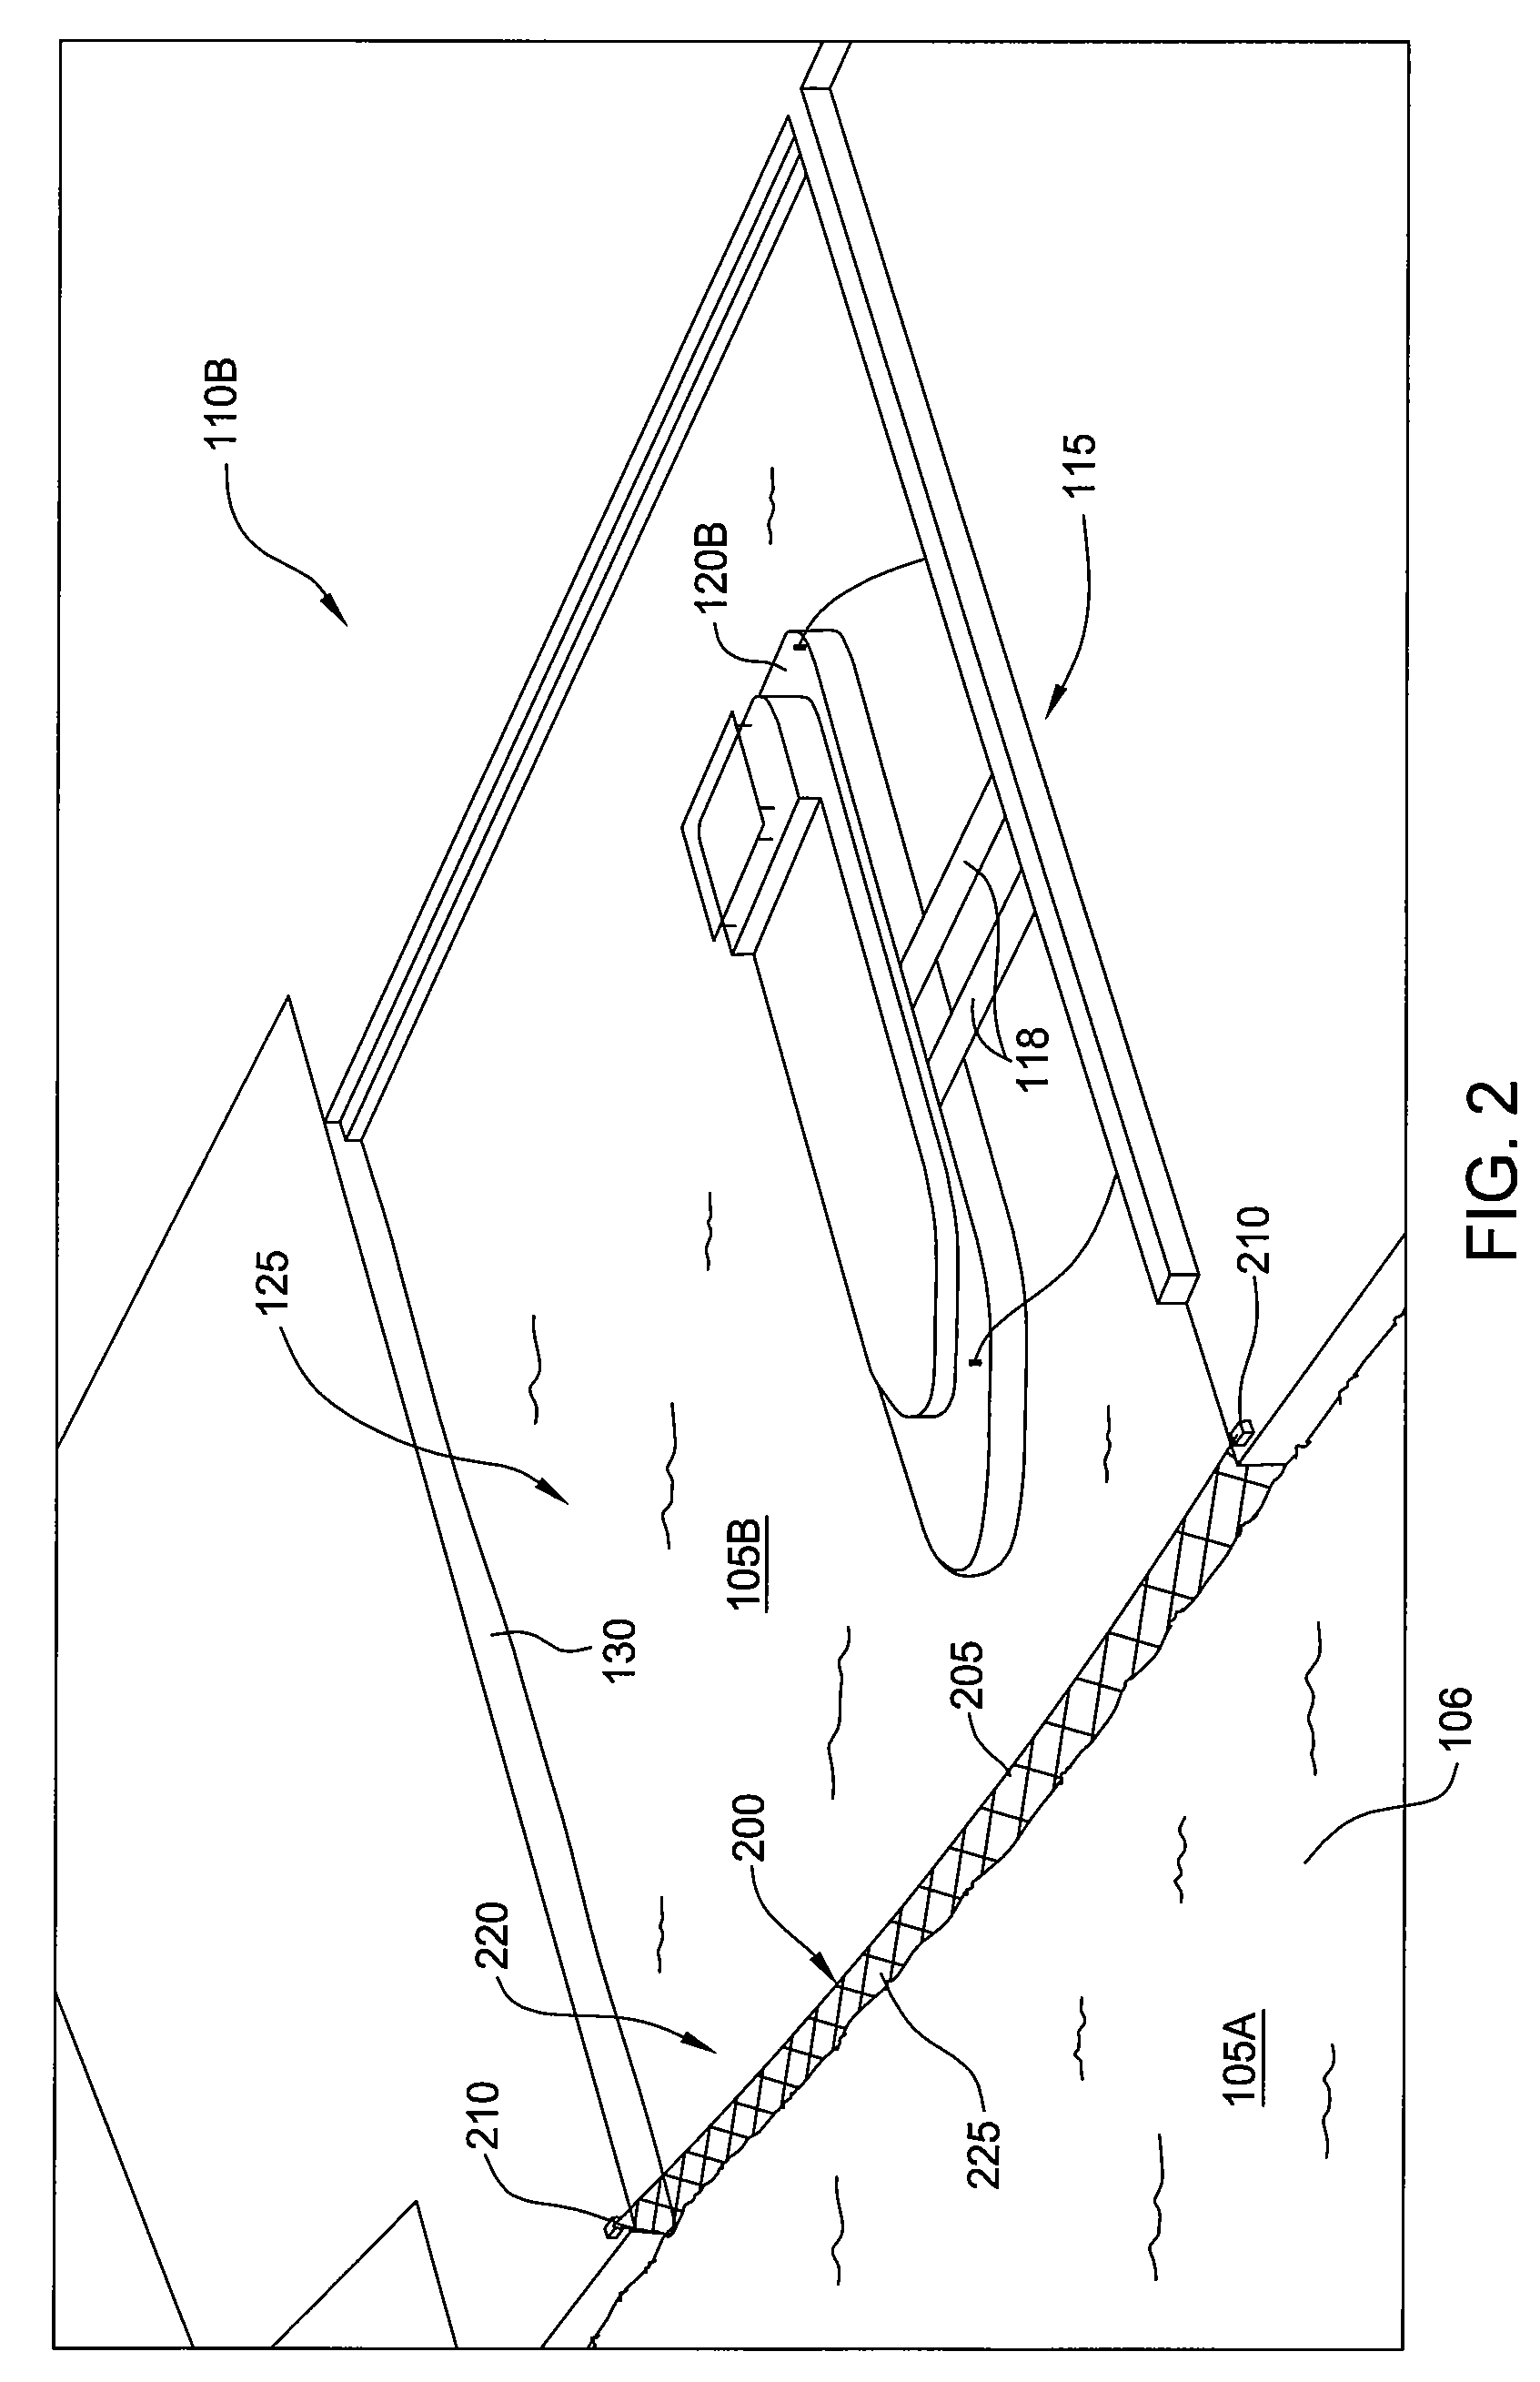 Marine vessel landing site barrier